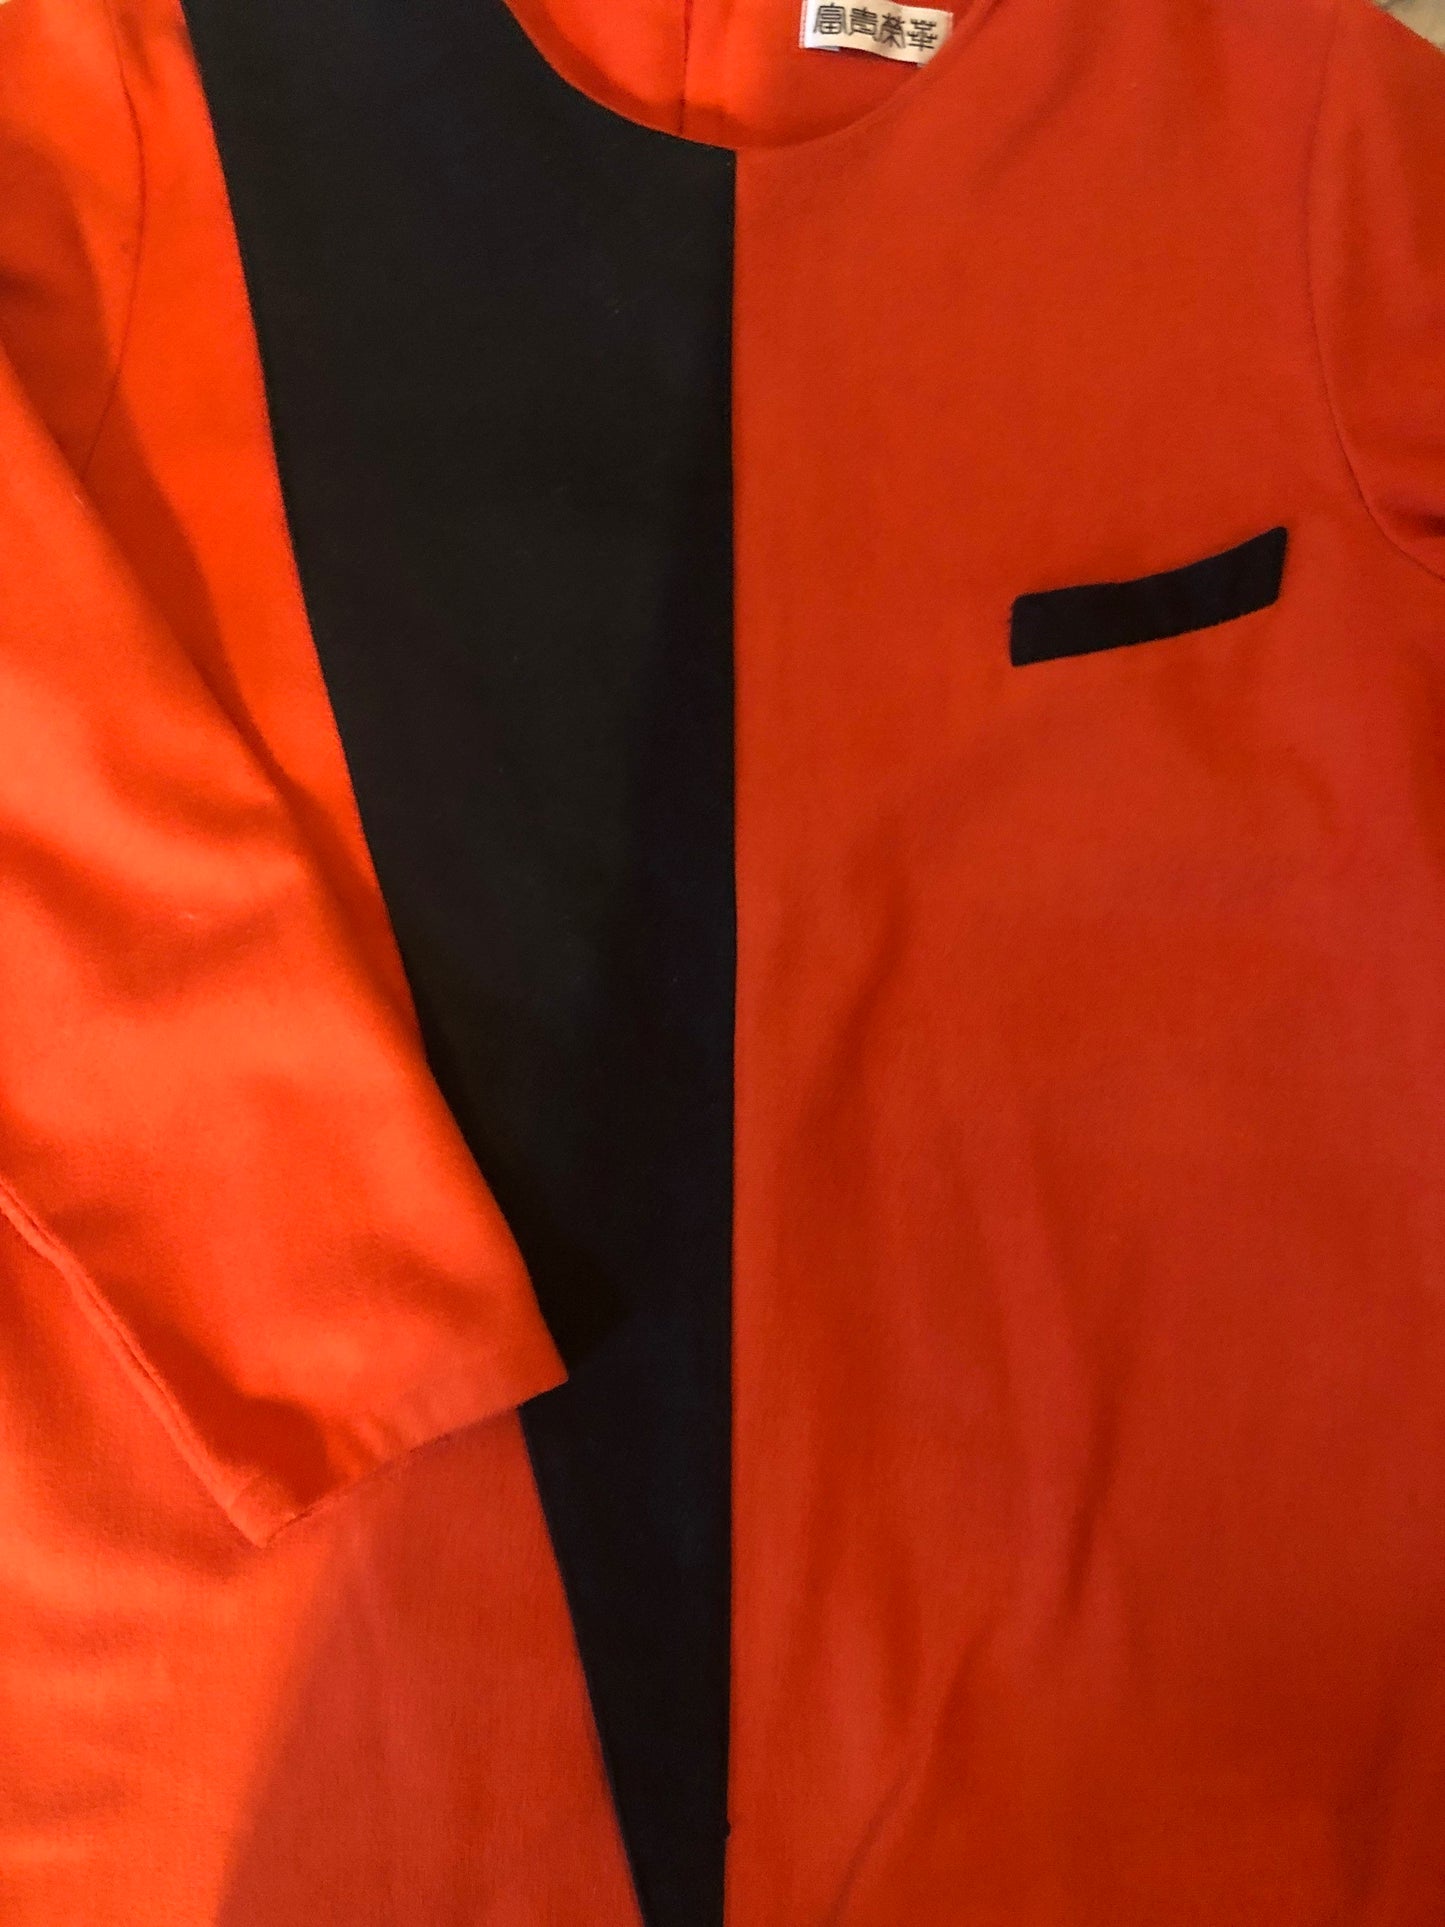 Stunning Orange and Black 80s Colorblock Dress, Size: Medium